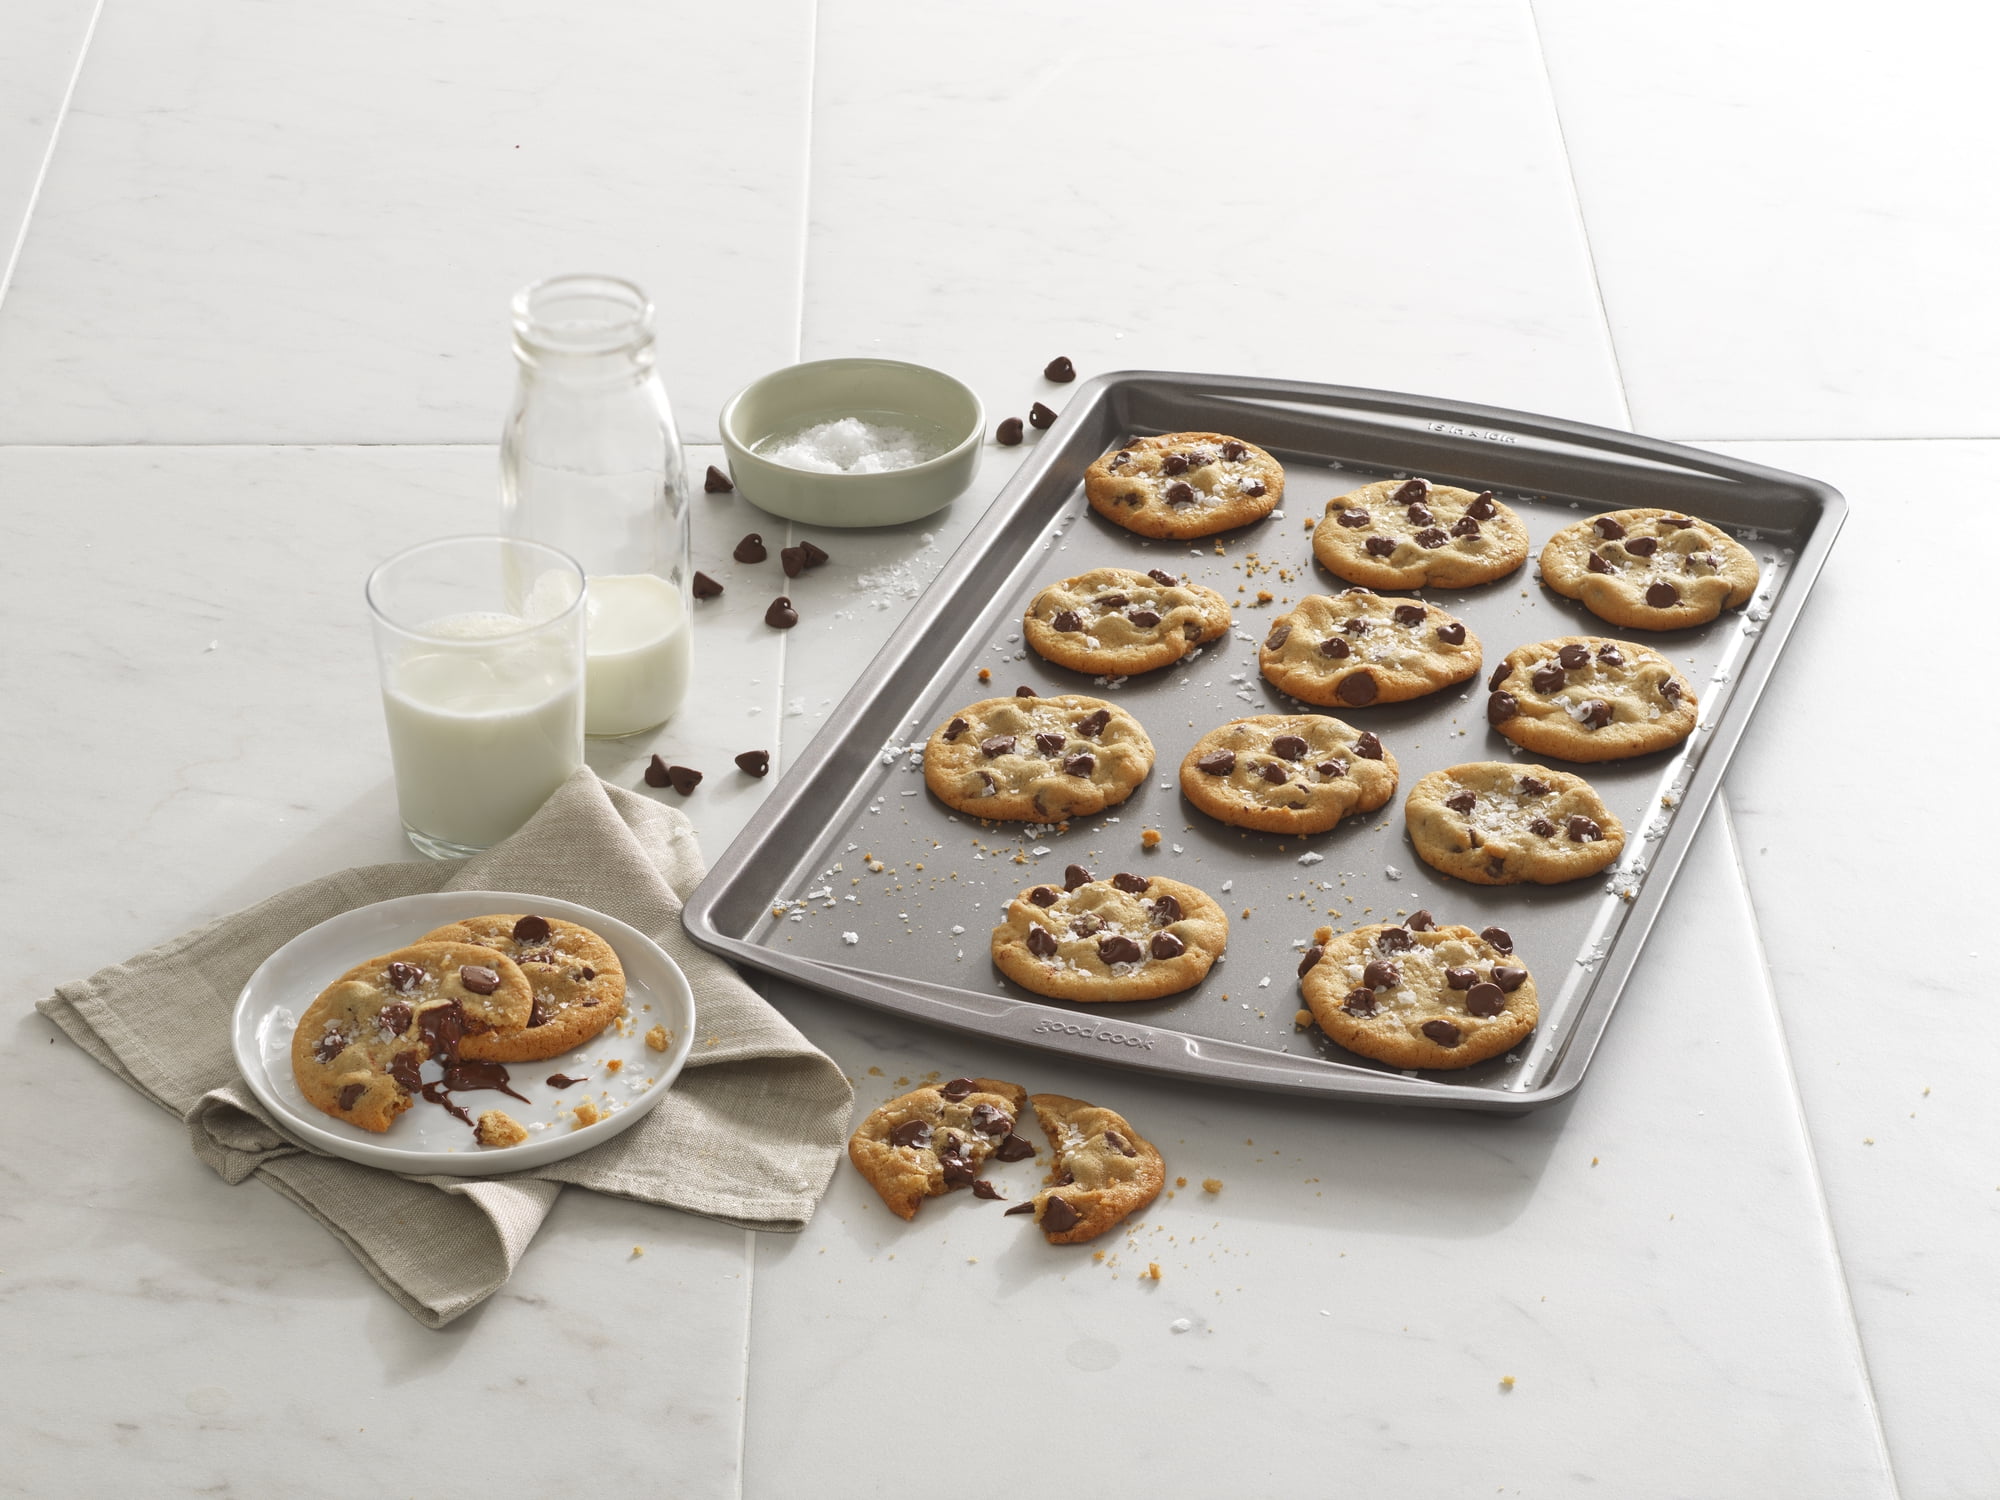 GoodCook® XL Nonstick Cookie Sheet - Gray, 15 x 21 in - Metro Market